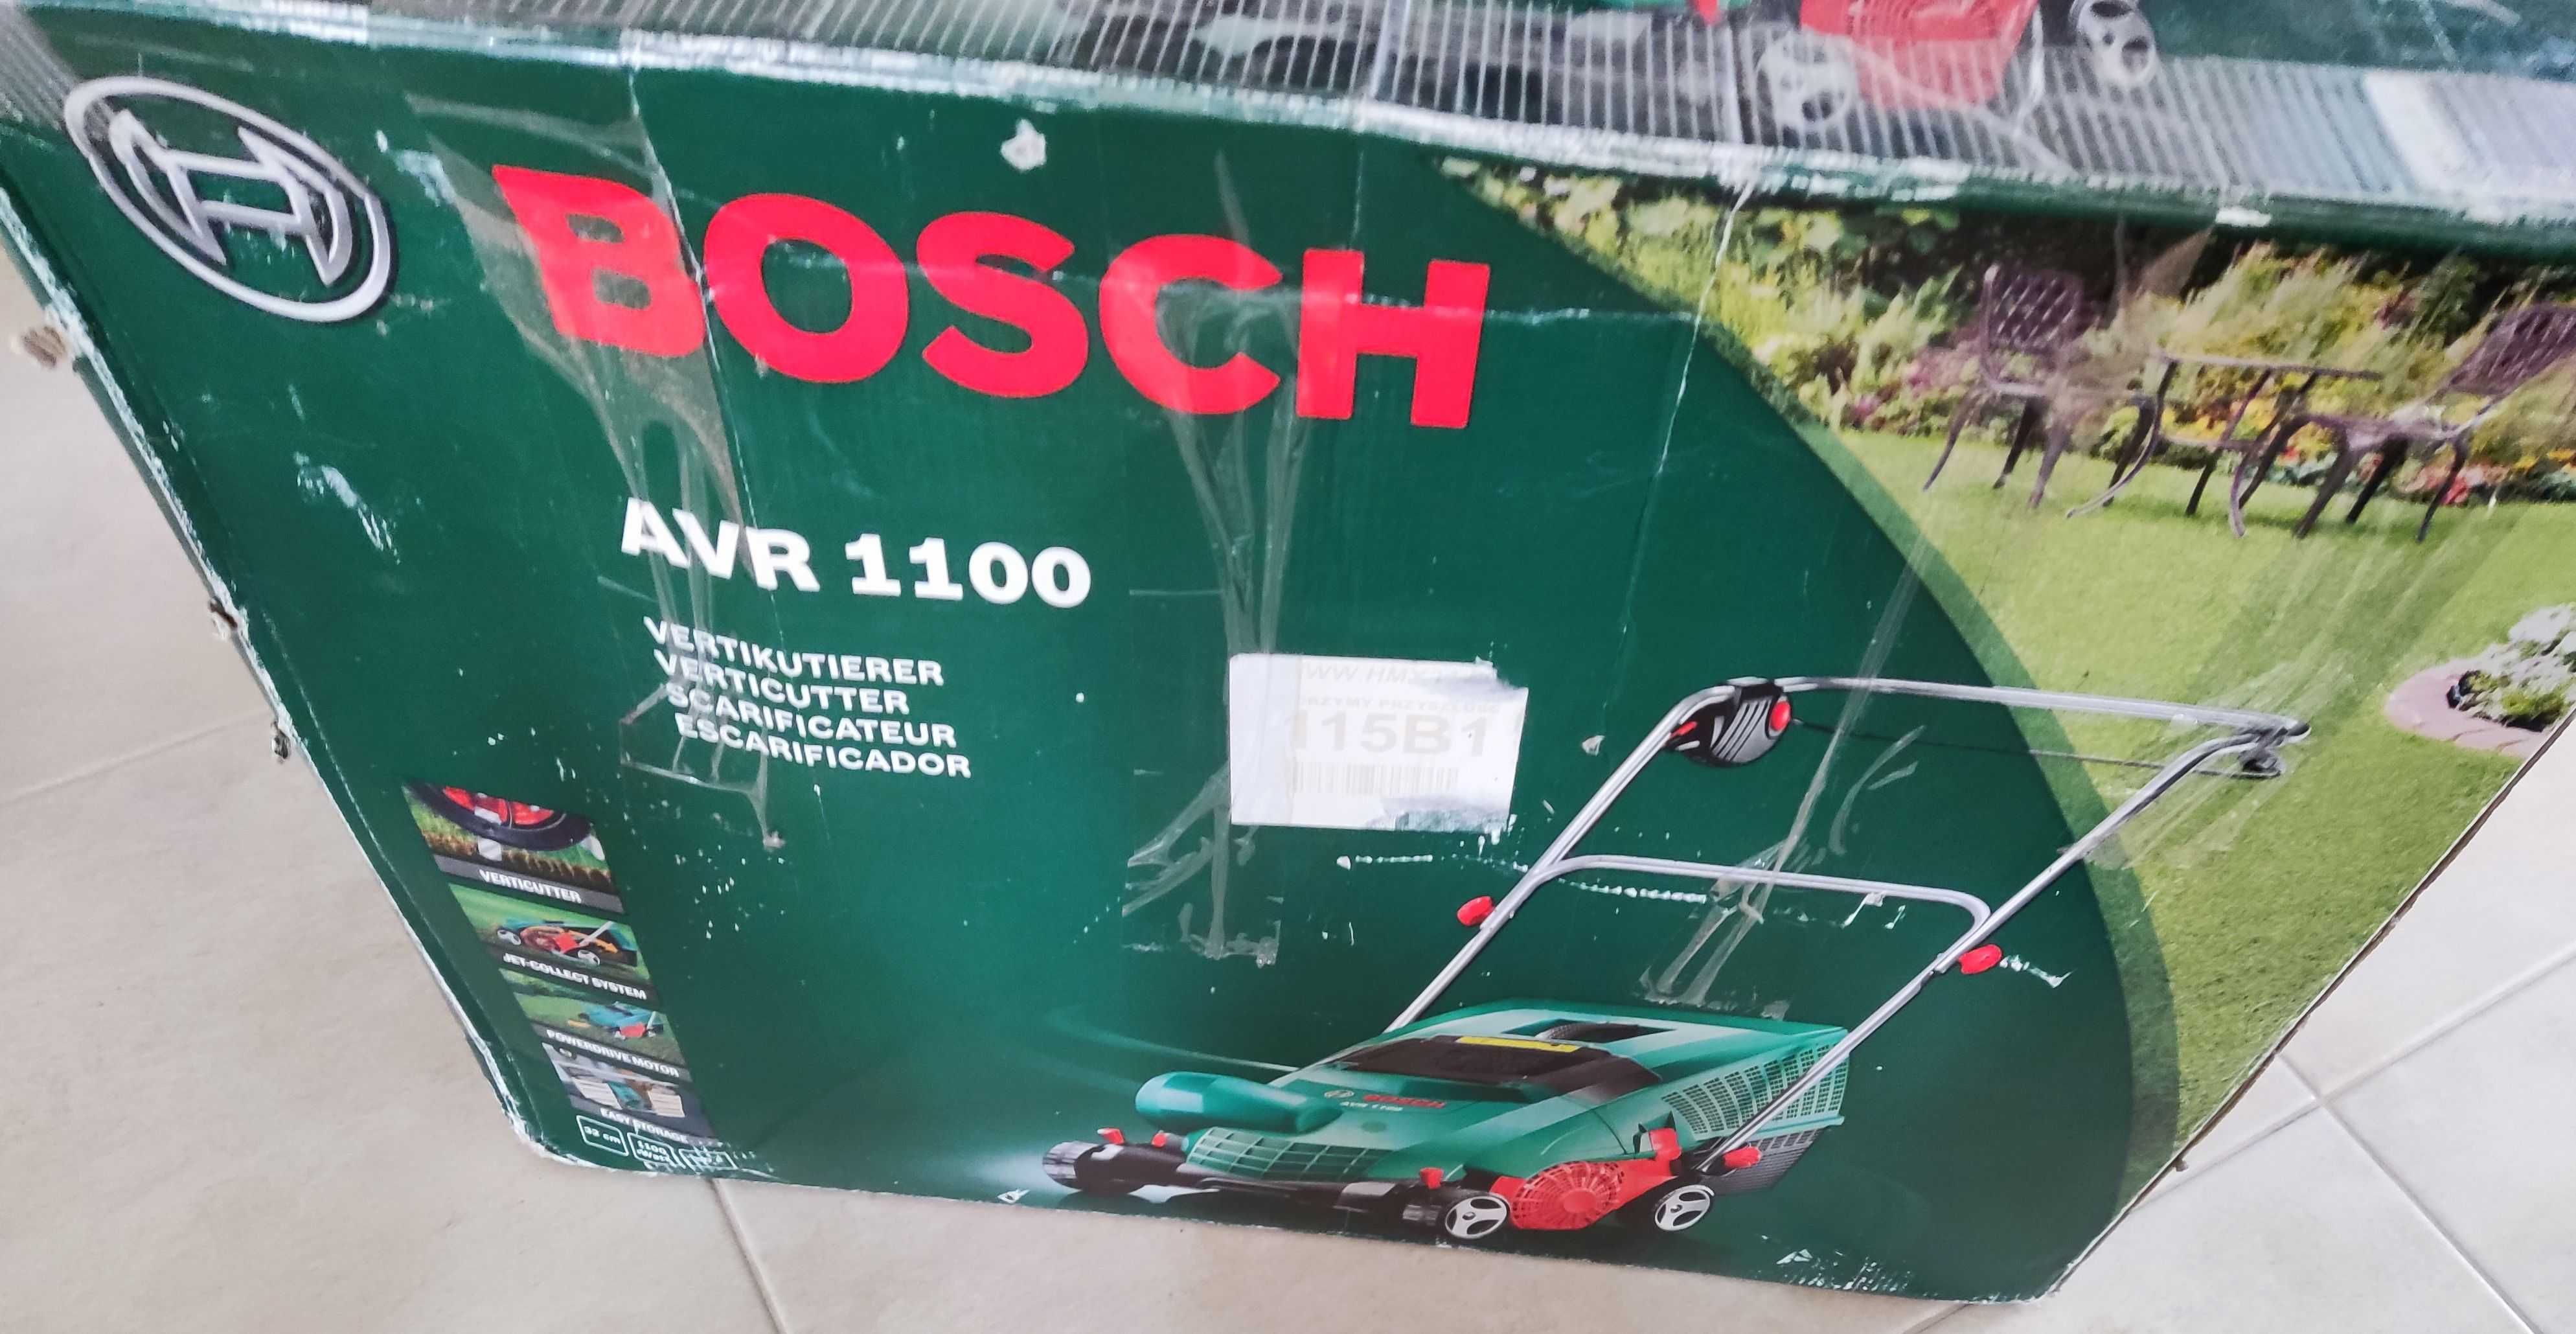 Wertykulator Bosch AVR 1100